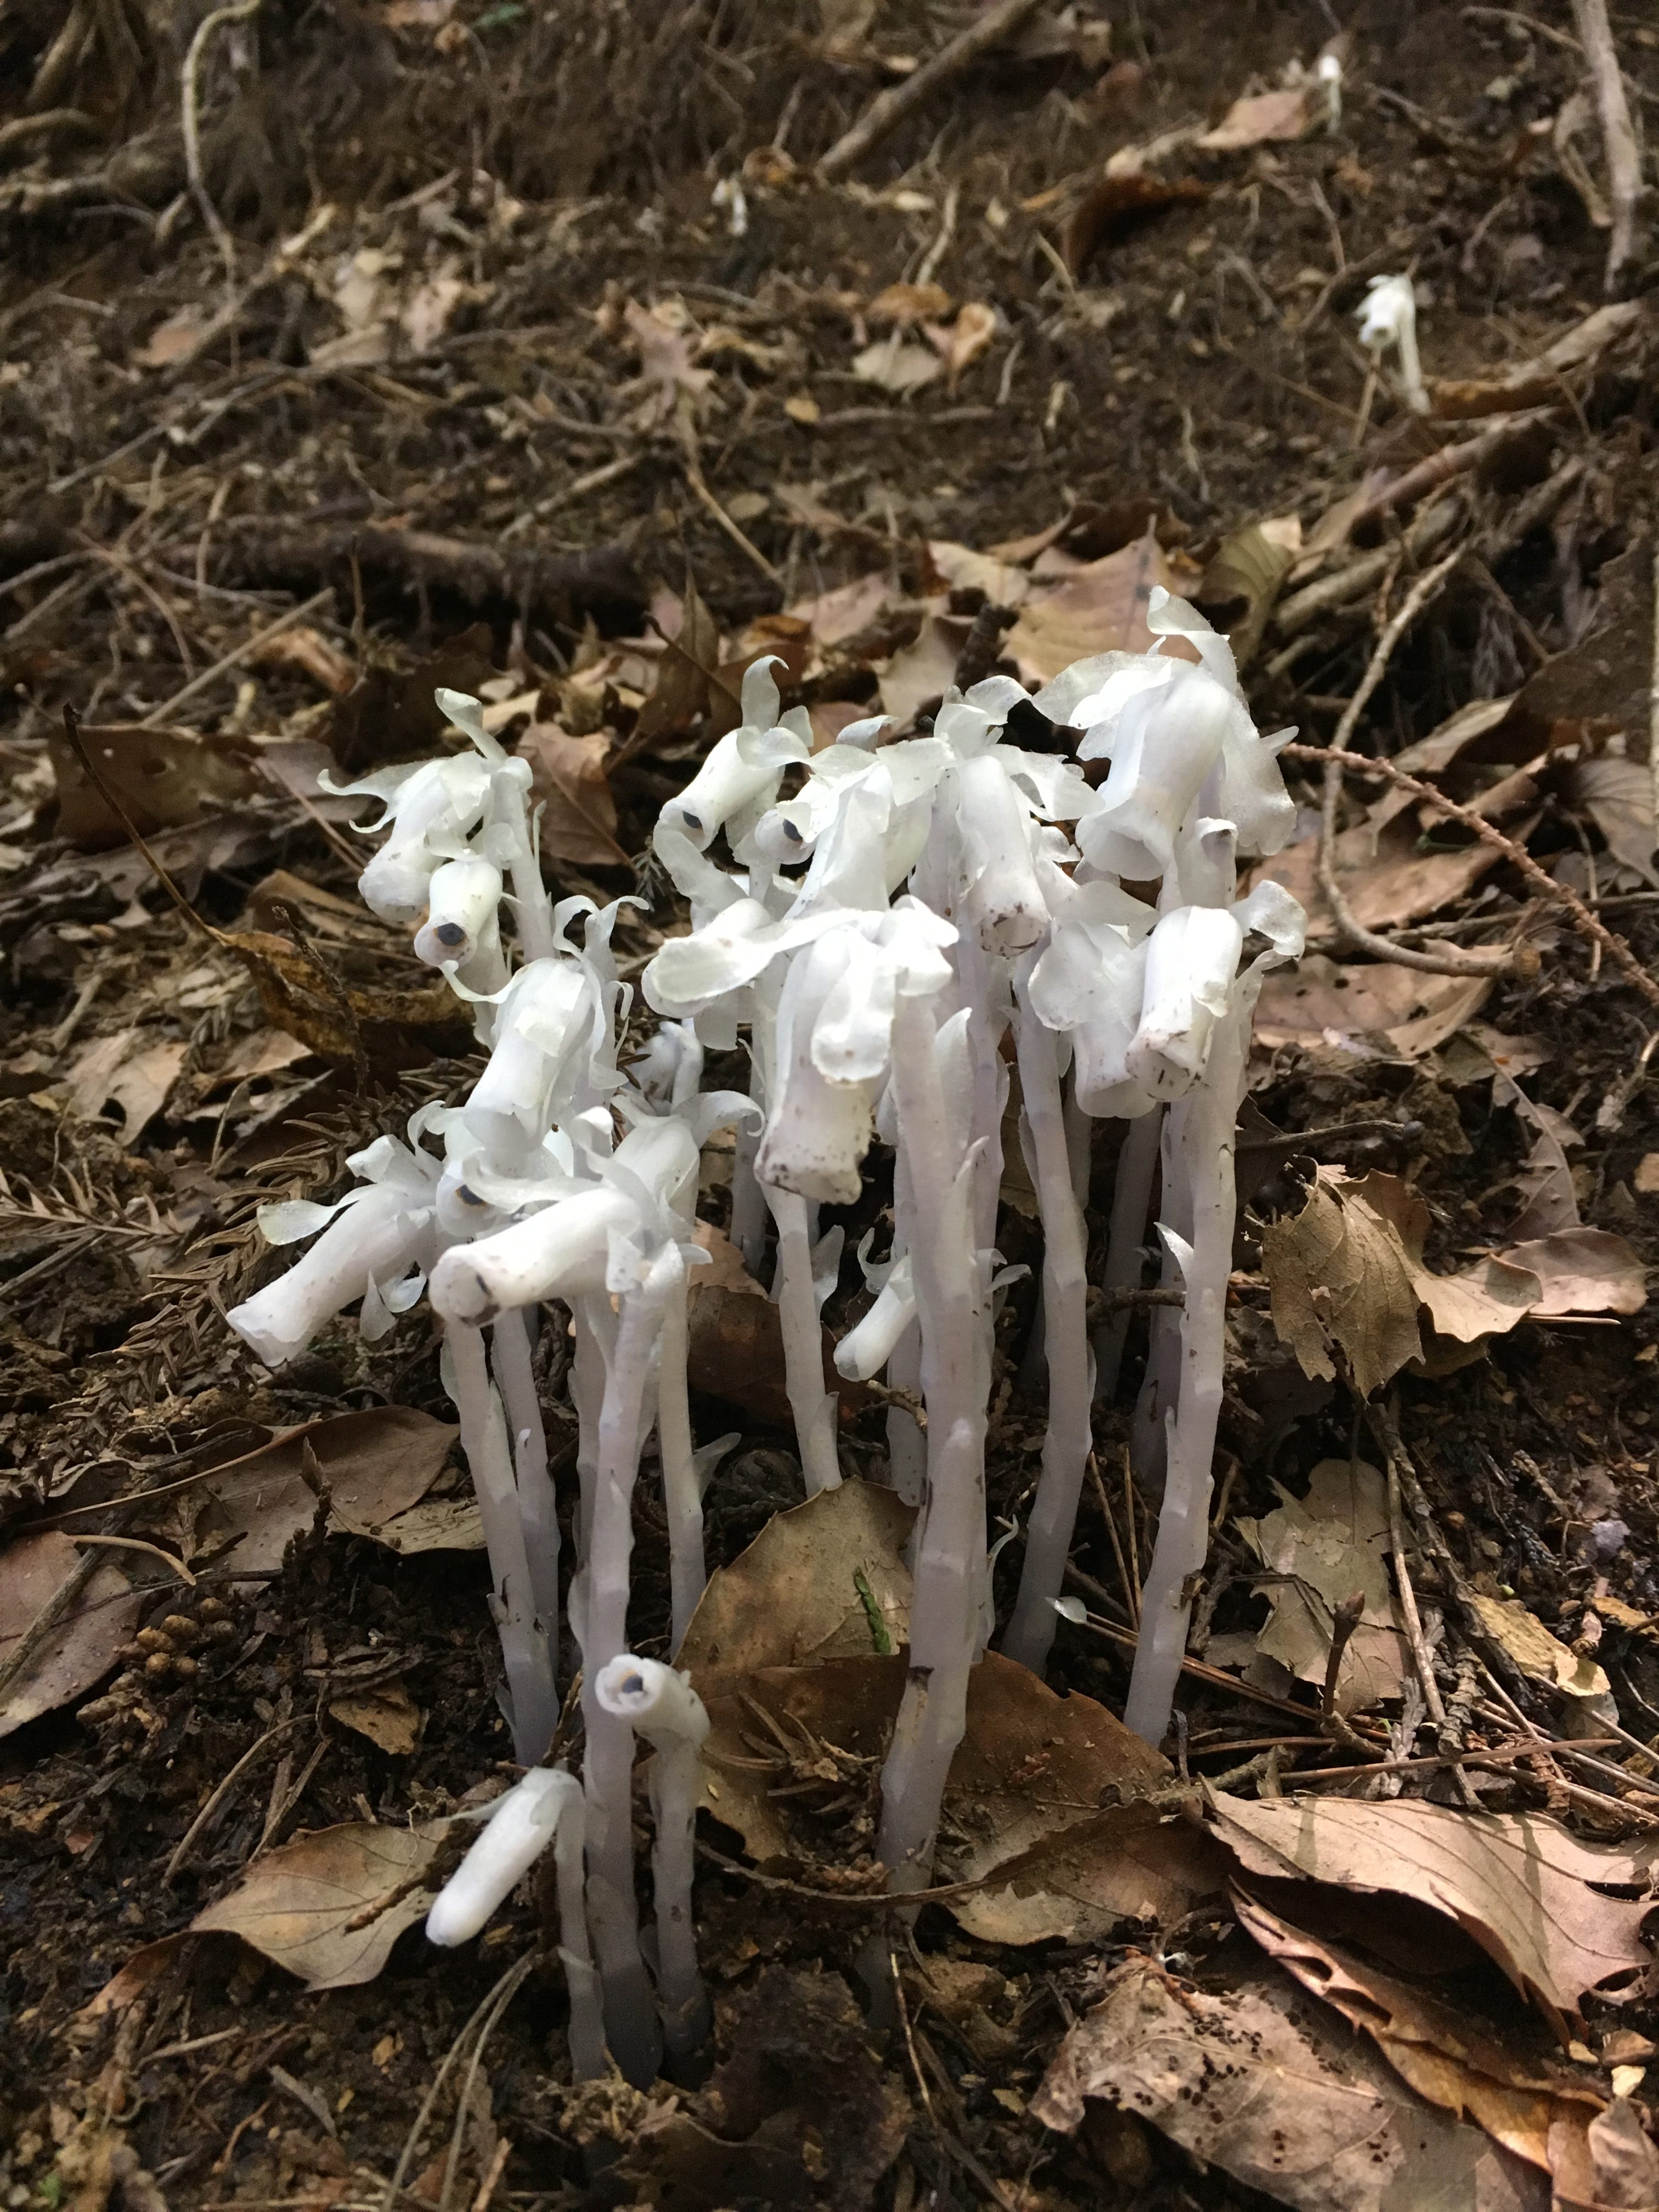 silver dragon plant, the ghost mushroom